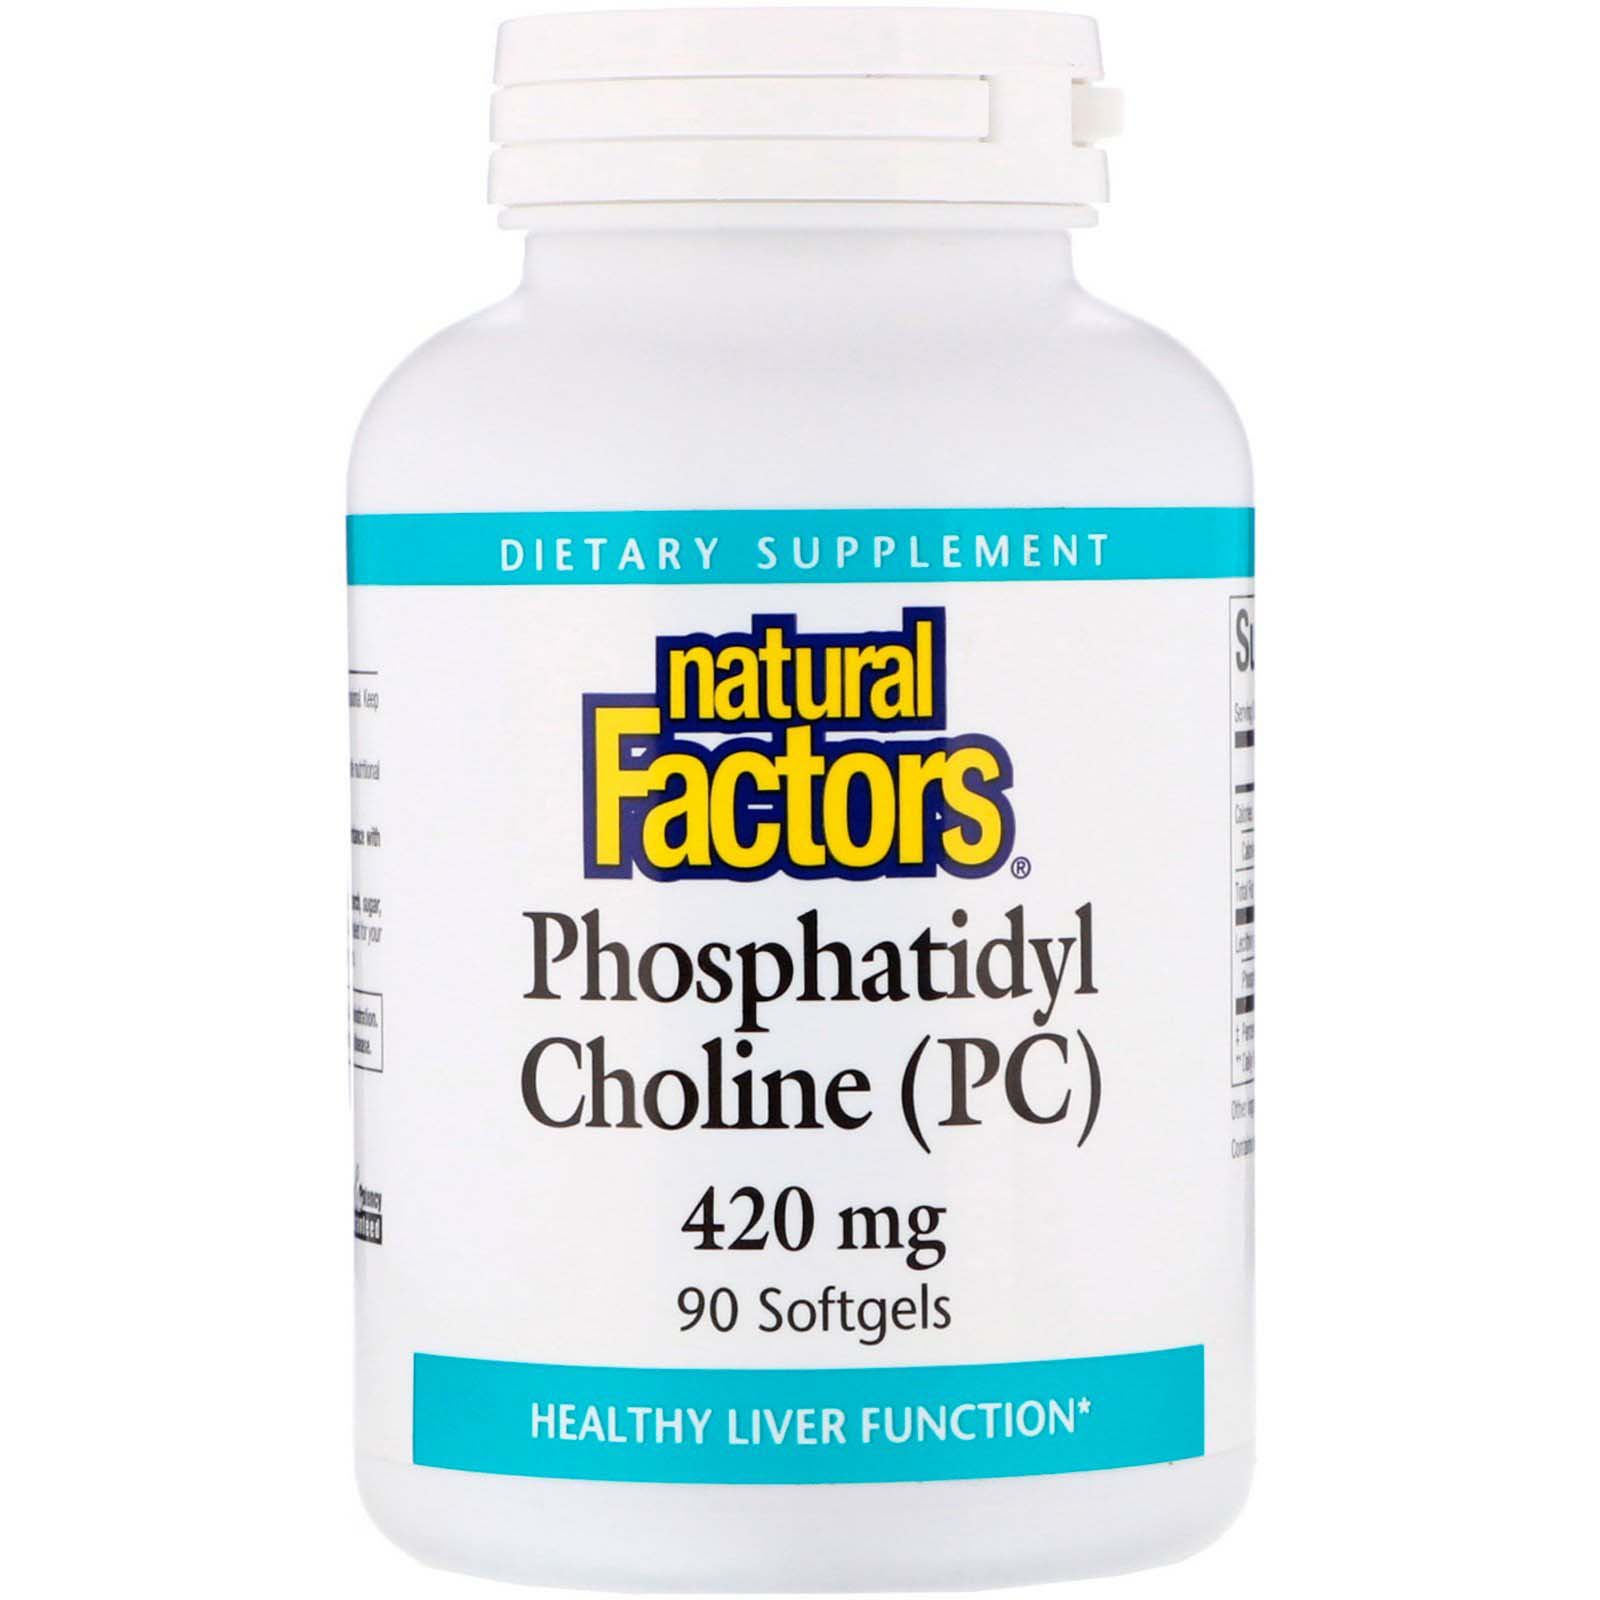 Natural Factors Phosphatidyl Choline 90 Softgels 420 mg